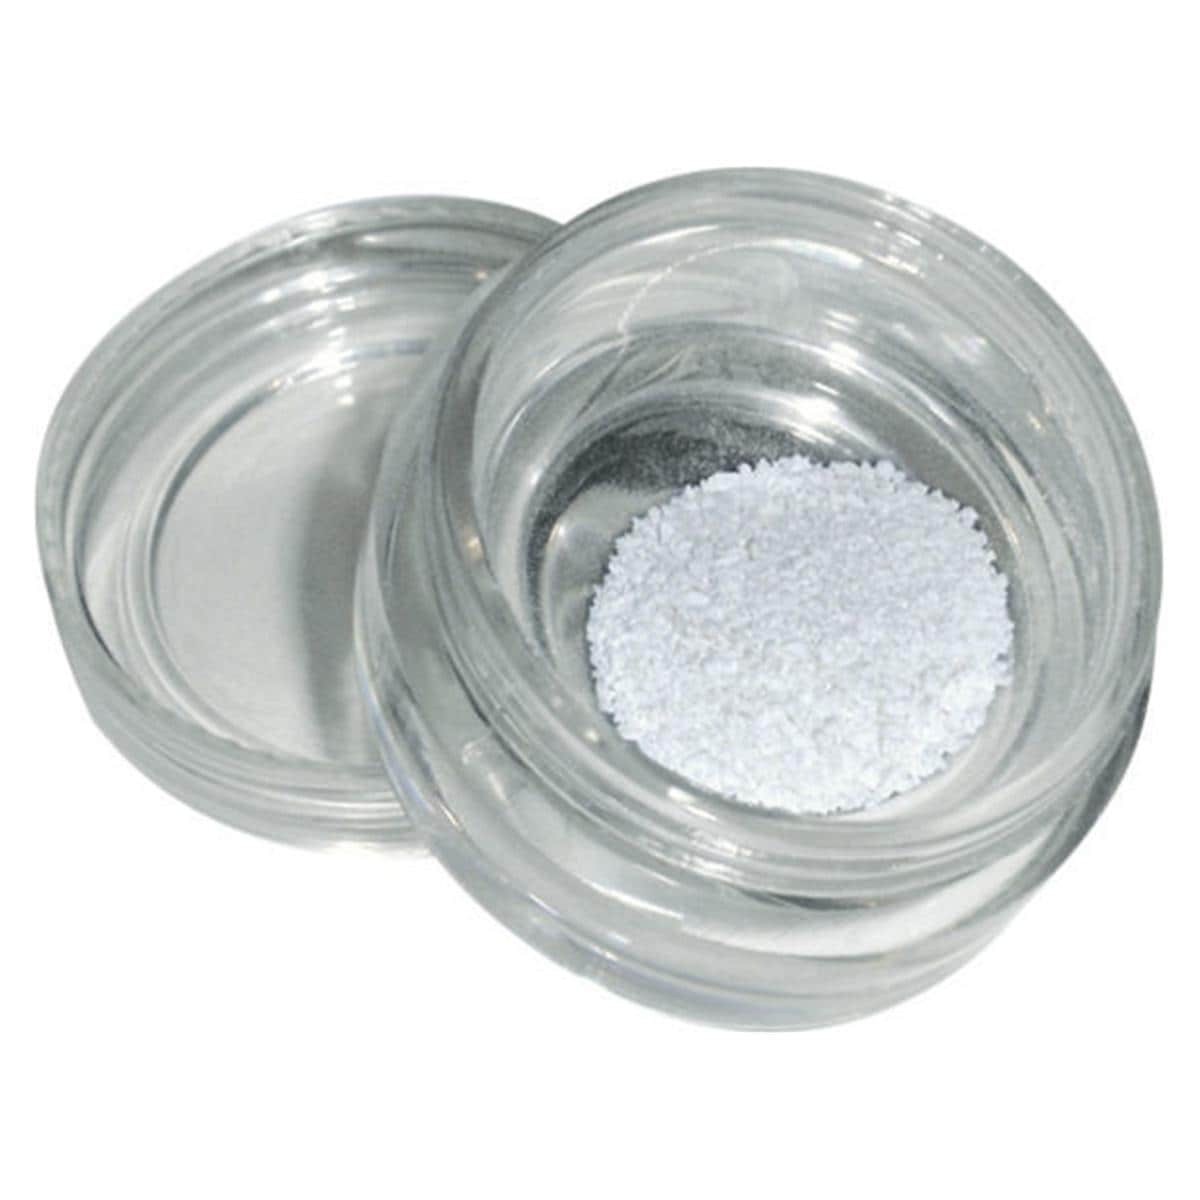 NuOss® Granulat - Spongiosagranulat (Cancellous), 0,25 - 1,0 mm, Packung 0,5 g